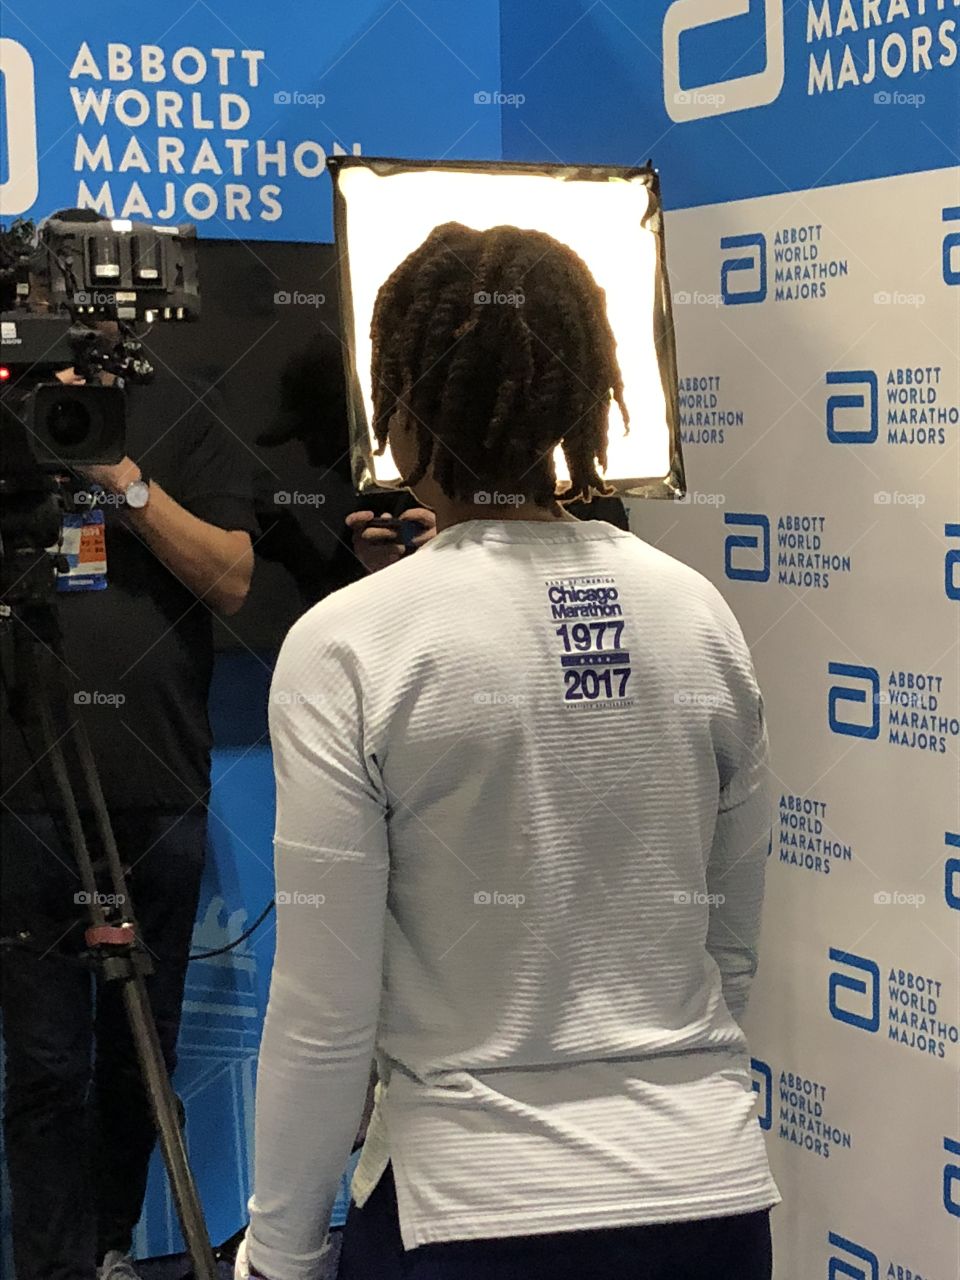 The Interview - Boston Marathon 2018